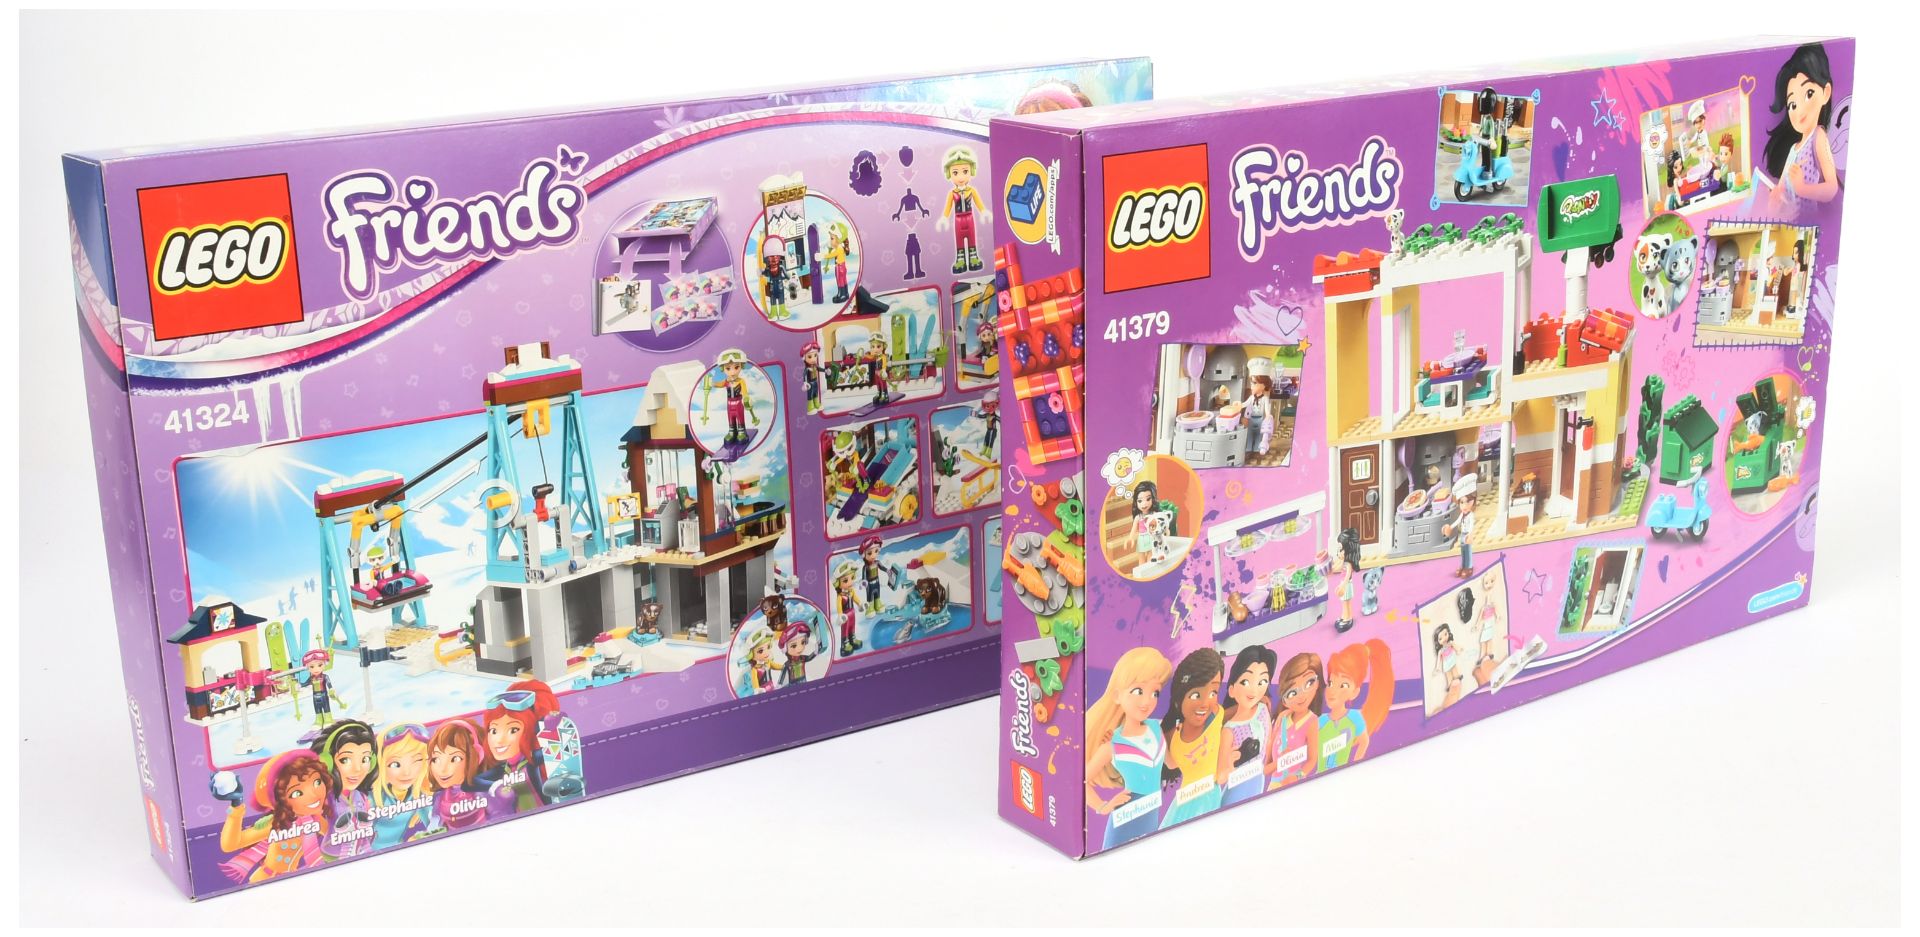 Lego Friends sets x2 Includes Snow Resort Ski Lift 41324, Heartlake City Restaurant 41379. Unopen... - Image 2 of 2